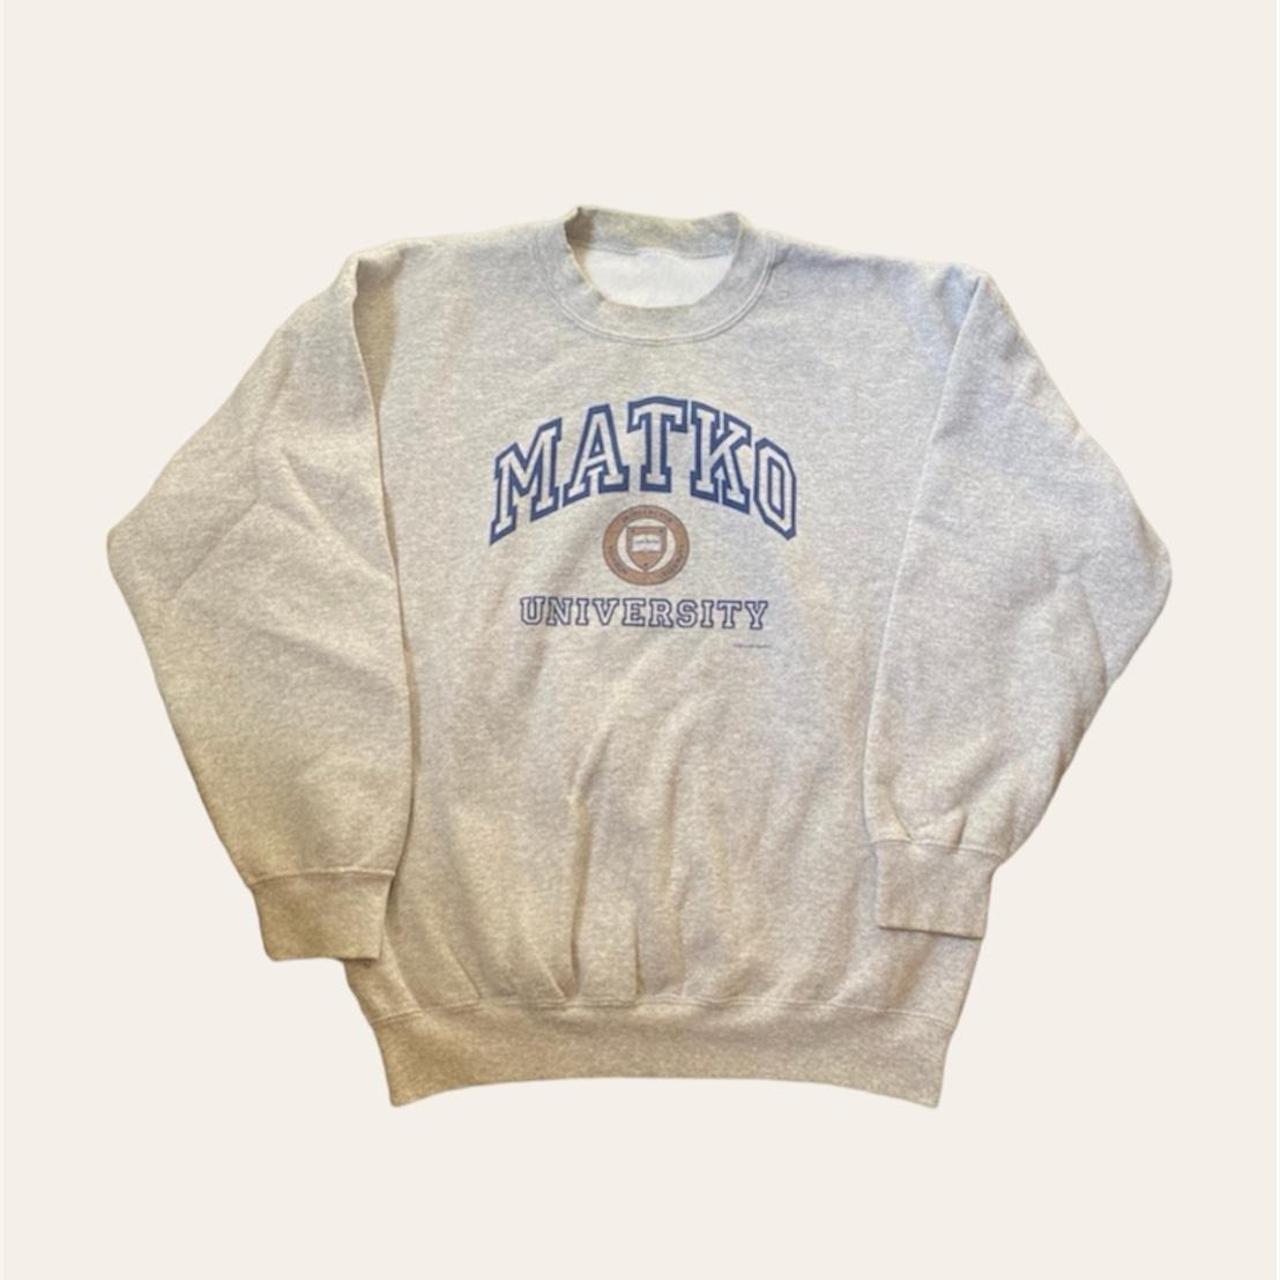 Matko University Vintage Sweatshirt. No tag. Had